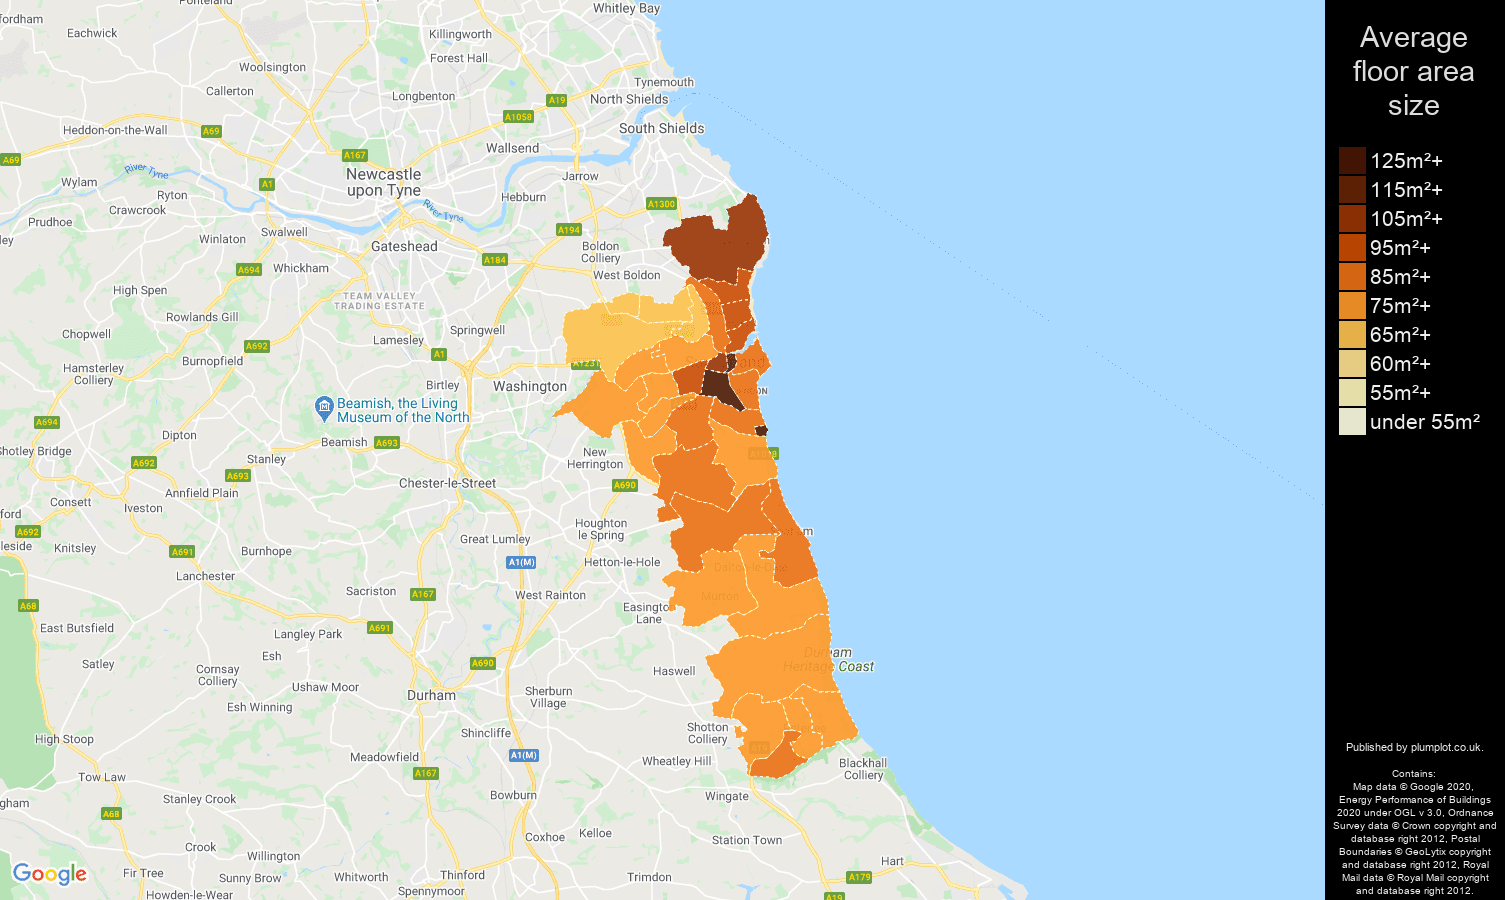 Sunderland map of average floor area size of houses